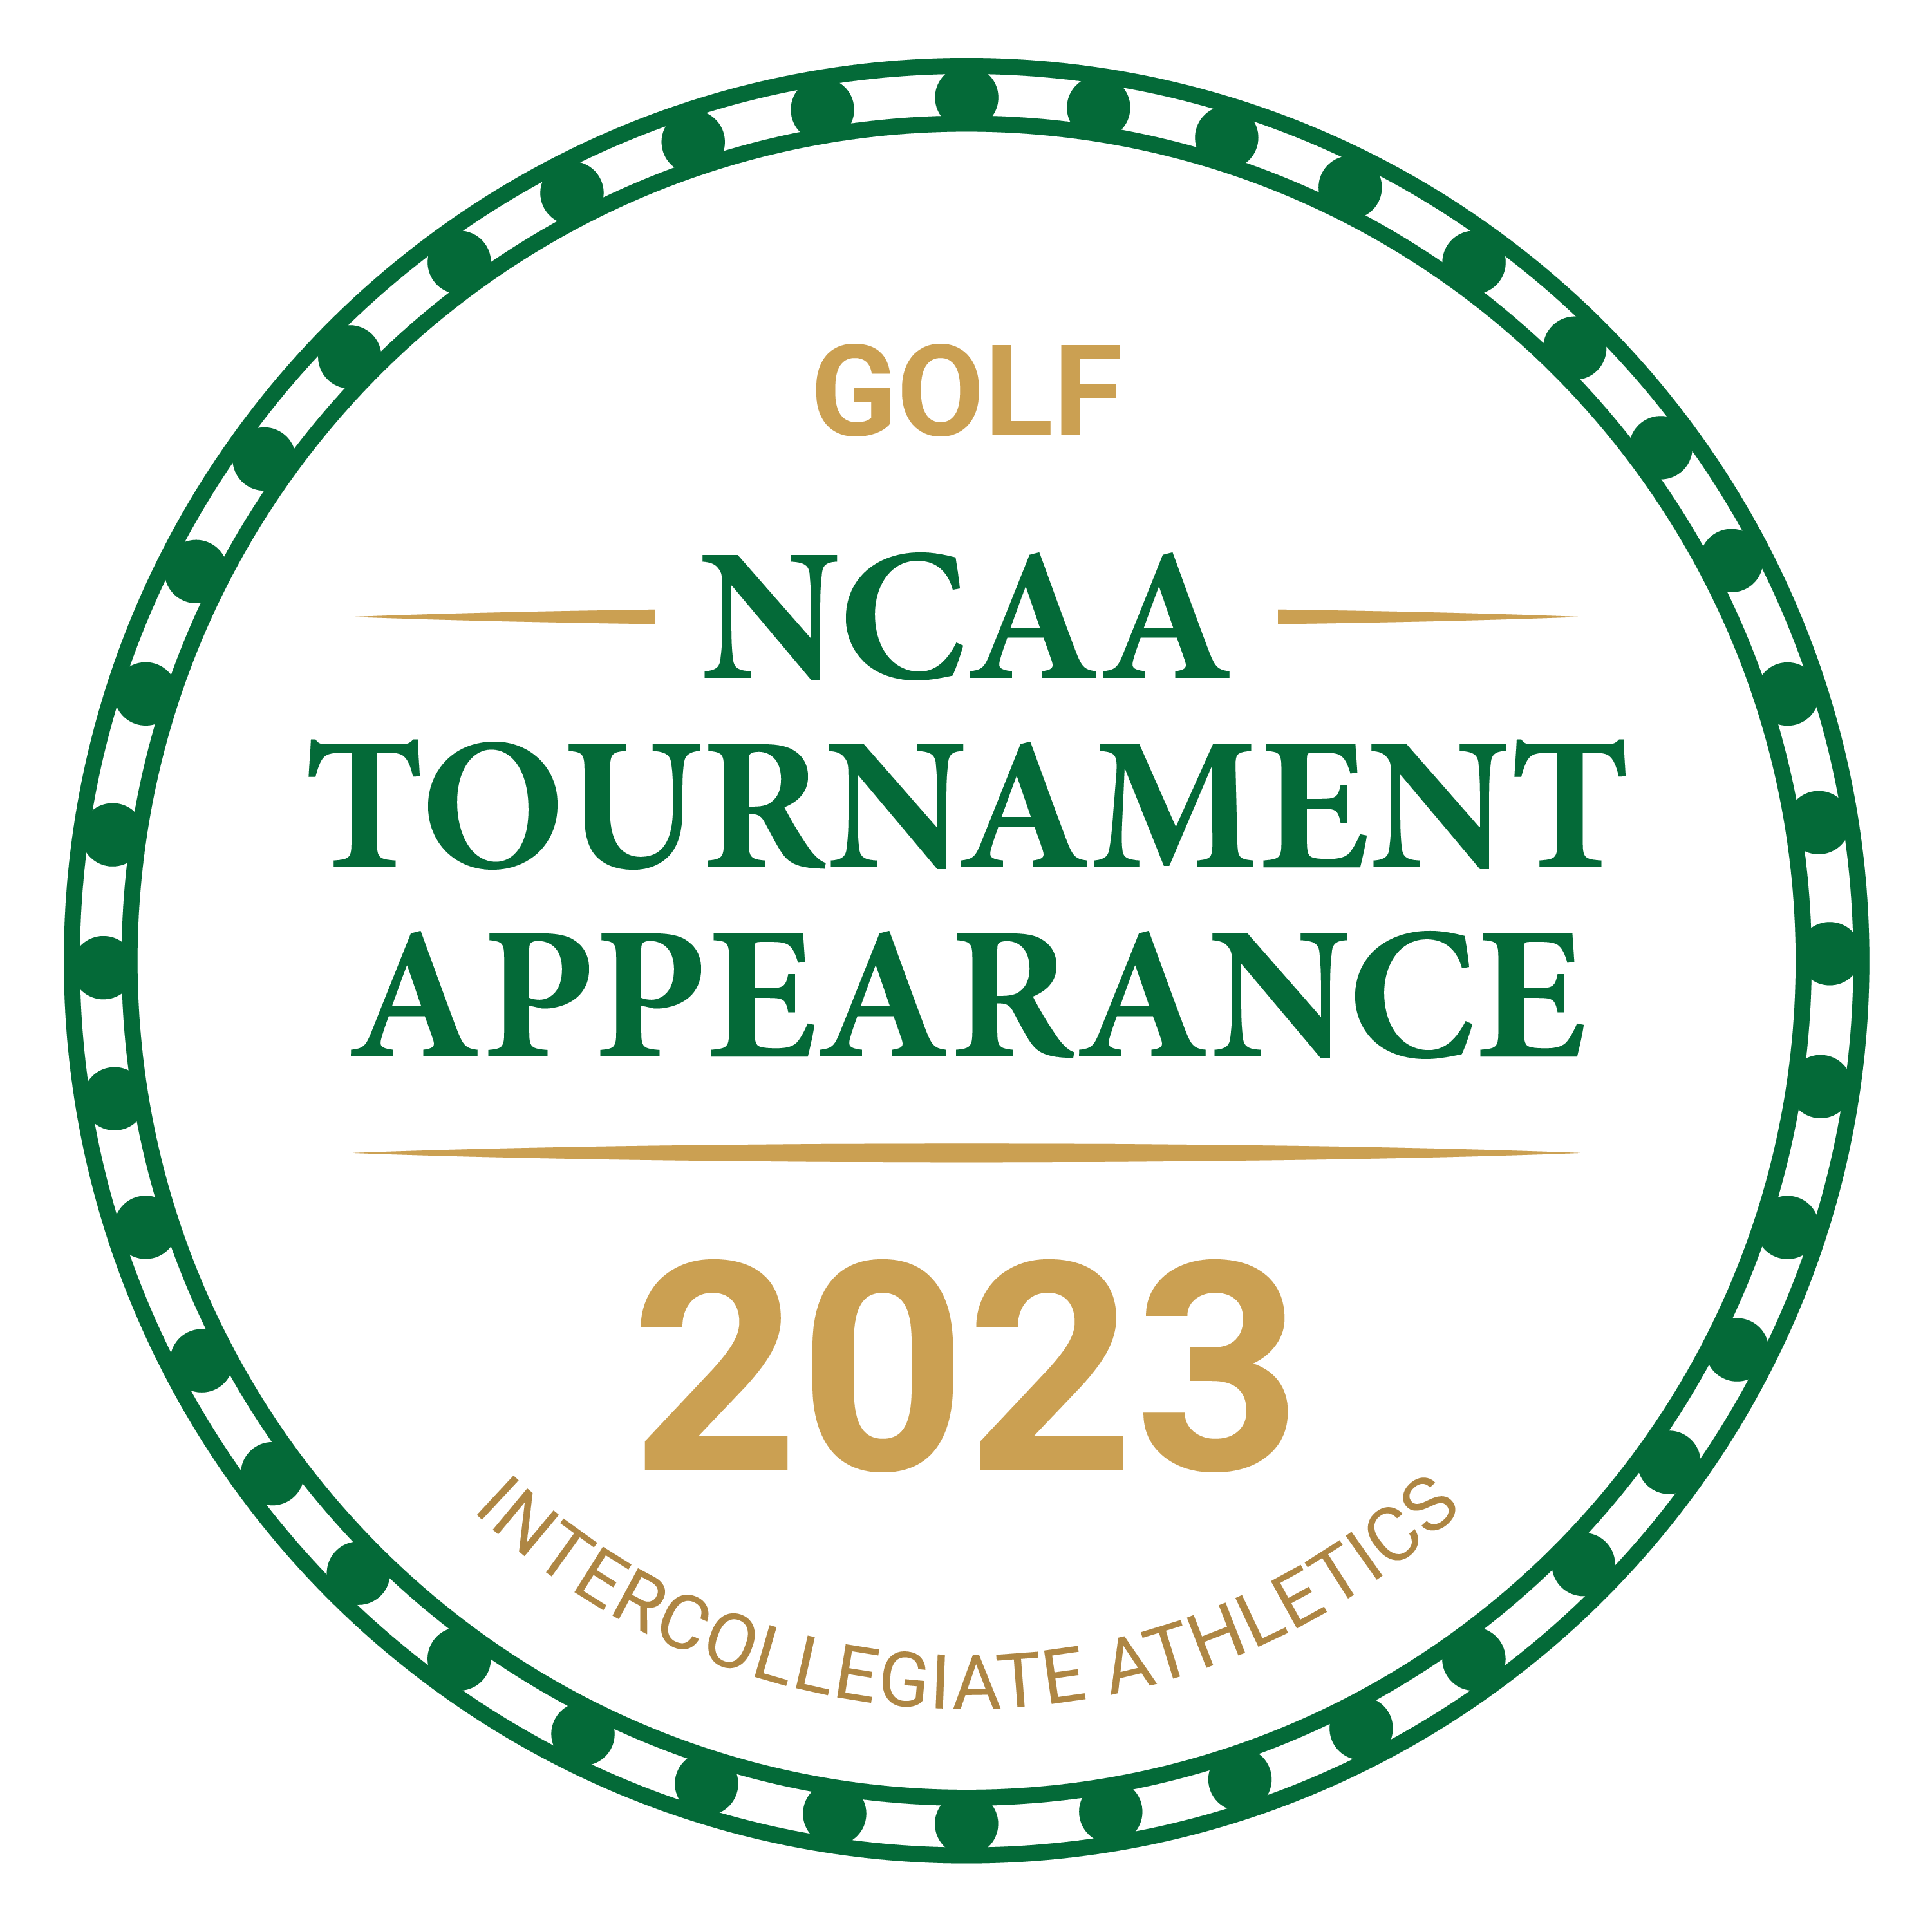 2022 Intercollegiate Athletics NCAA Tournament Appearance Golf